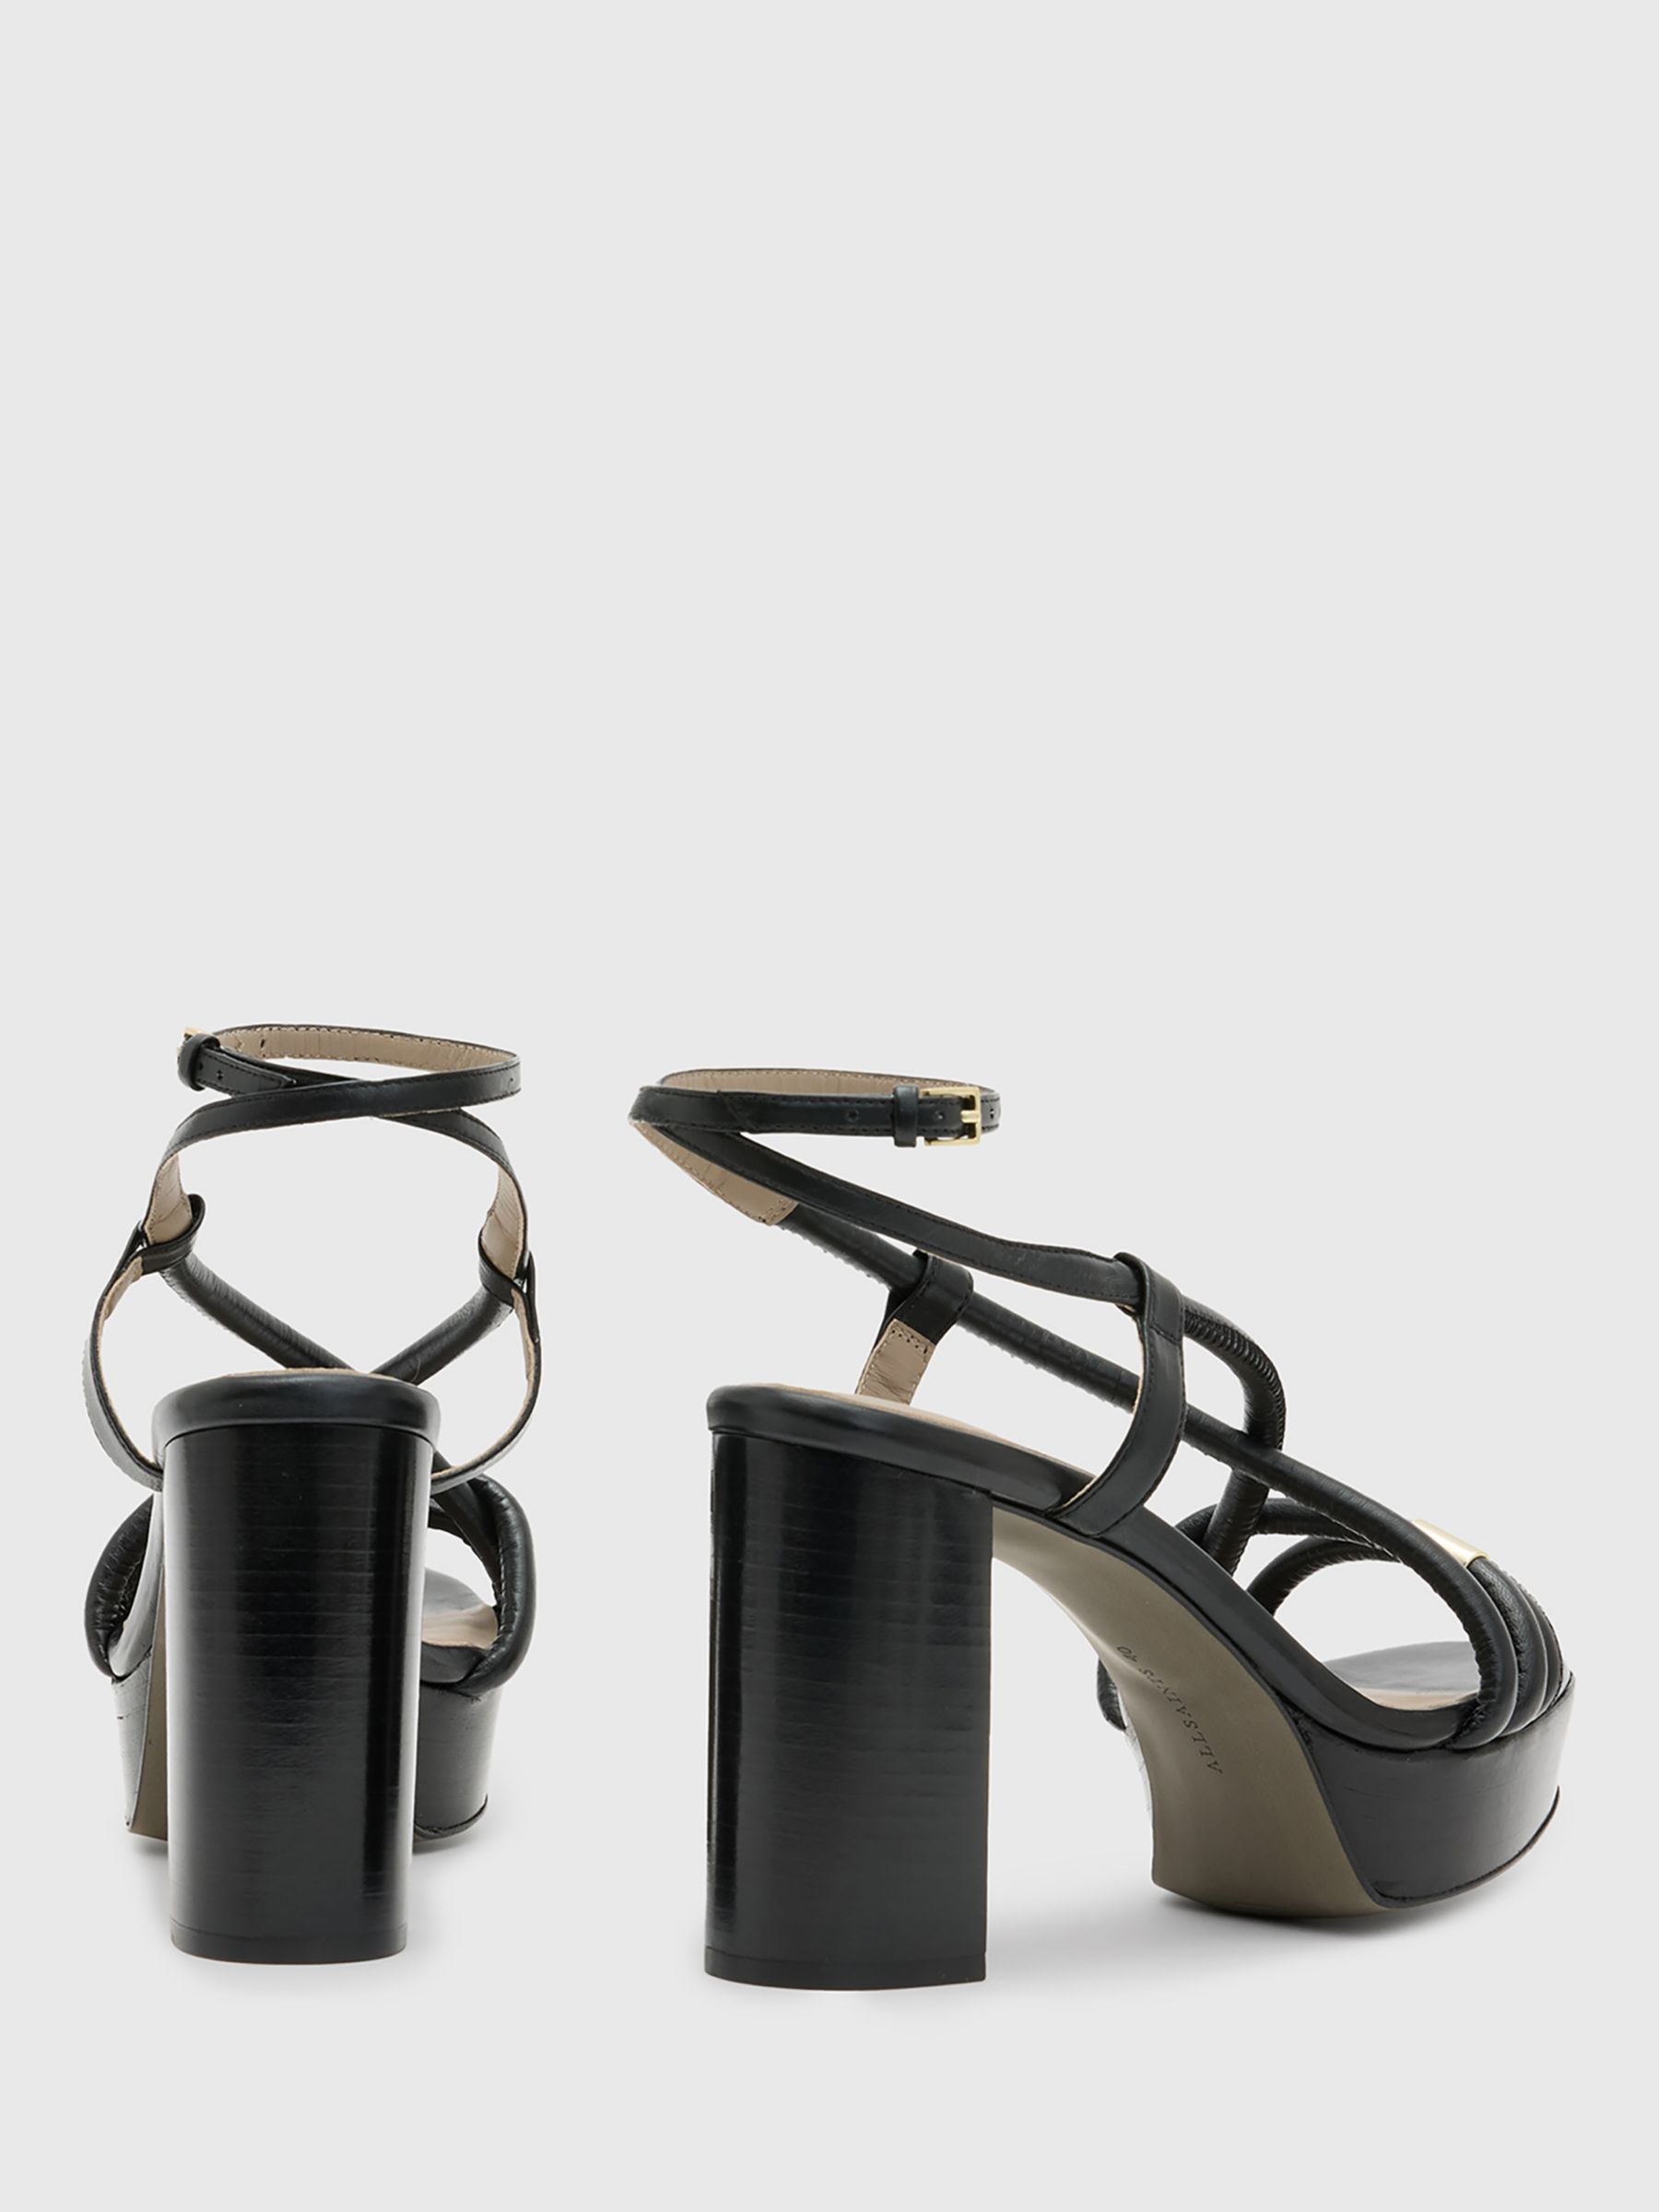 AllSaints Bella Leather Platform Sandals, Black, 2